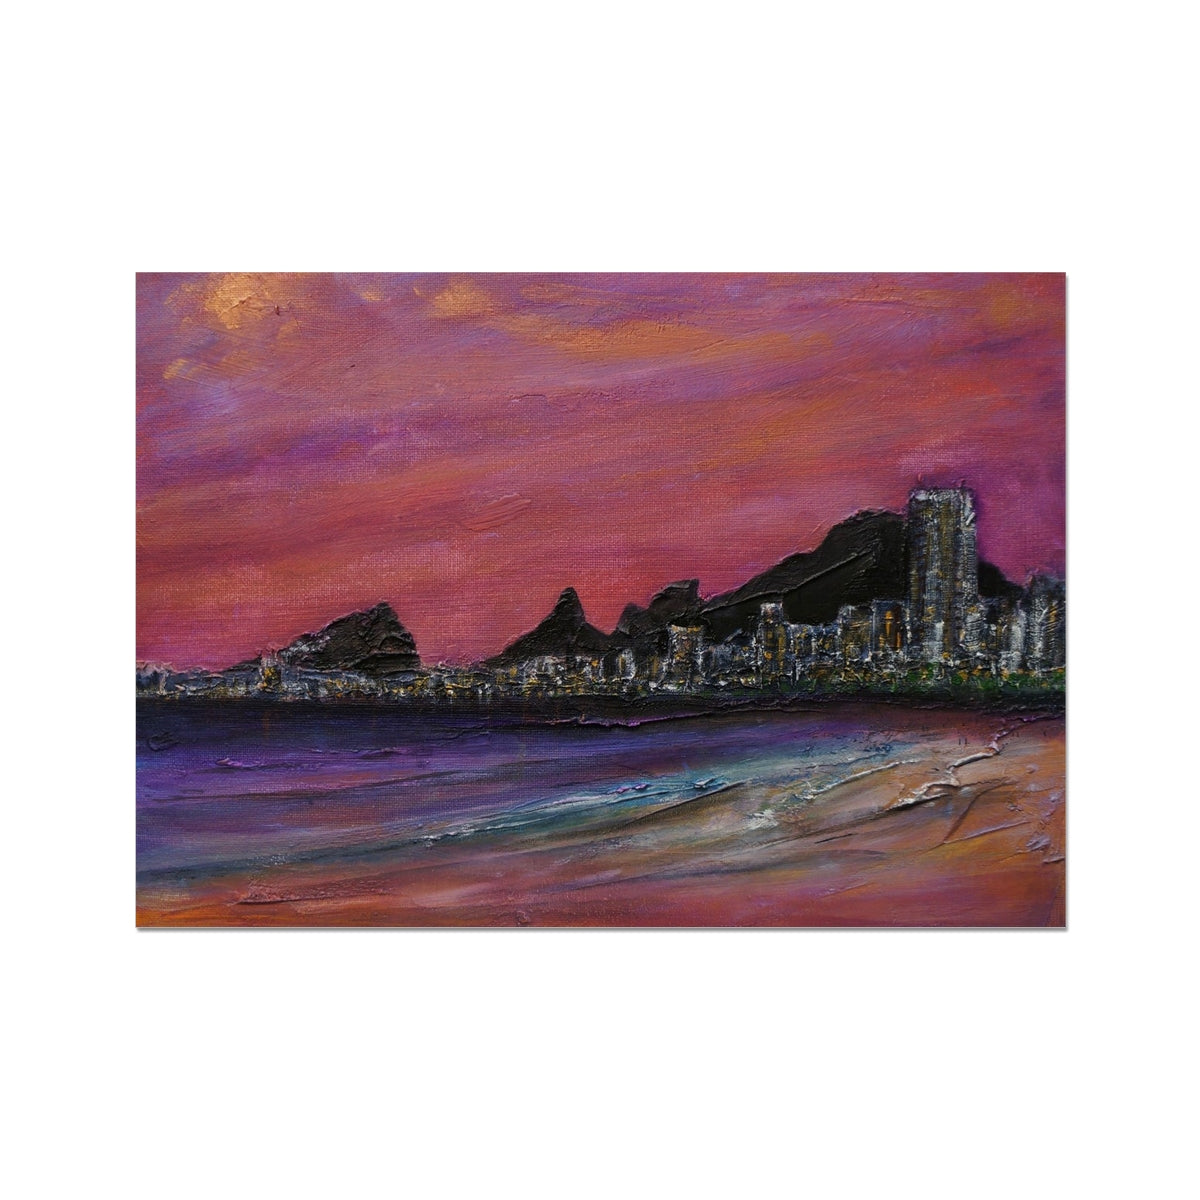 Copacabana Beach Dusk Painting | Fine Art Prints From Scotland-Unframed Prints-World Art Gallery-A2 Landscape-Paintings, Prints, Homeware, Art Gifts From Scotland By Scottish Artist Kevin Hunter